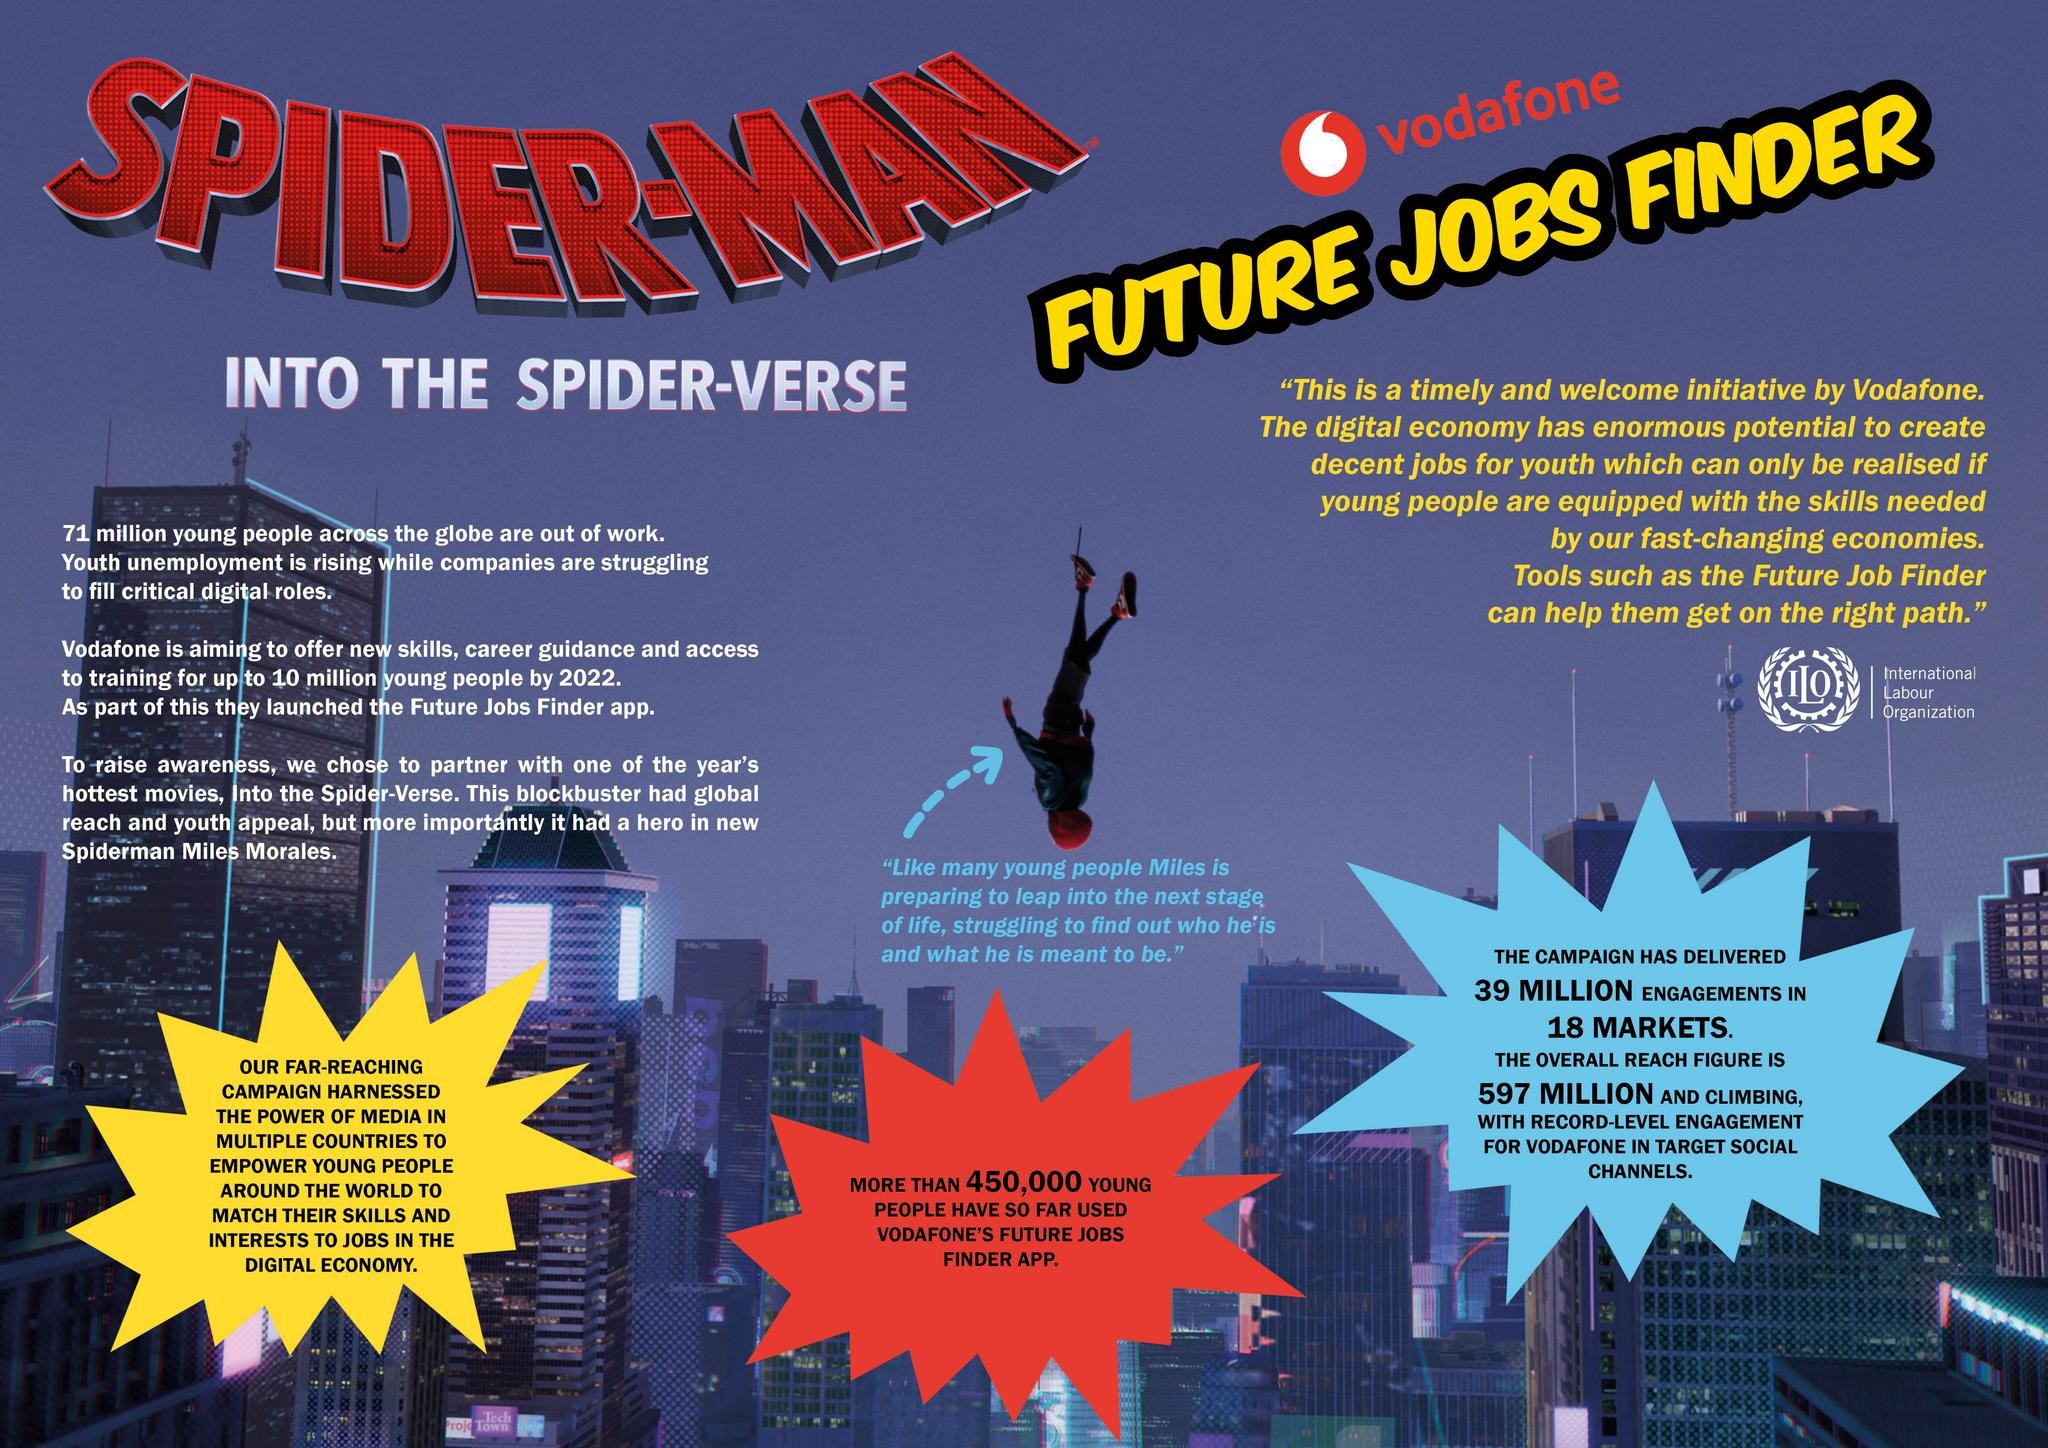 Into the Spider-Verse: Future Jobs Finder